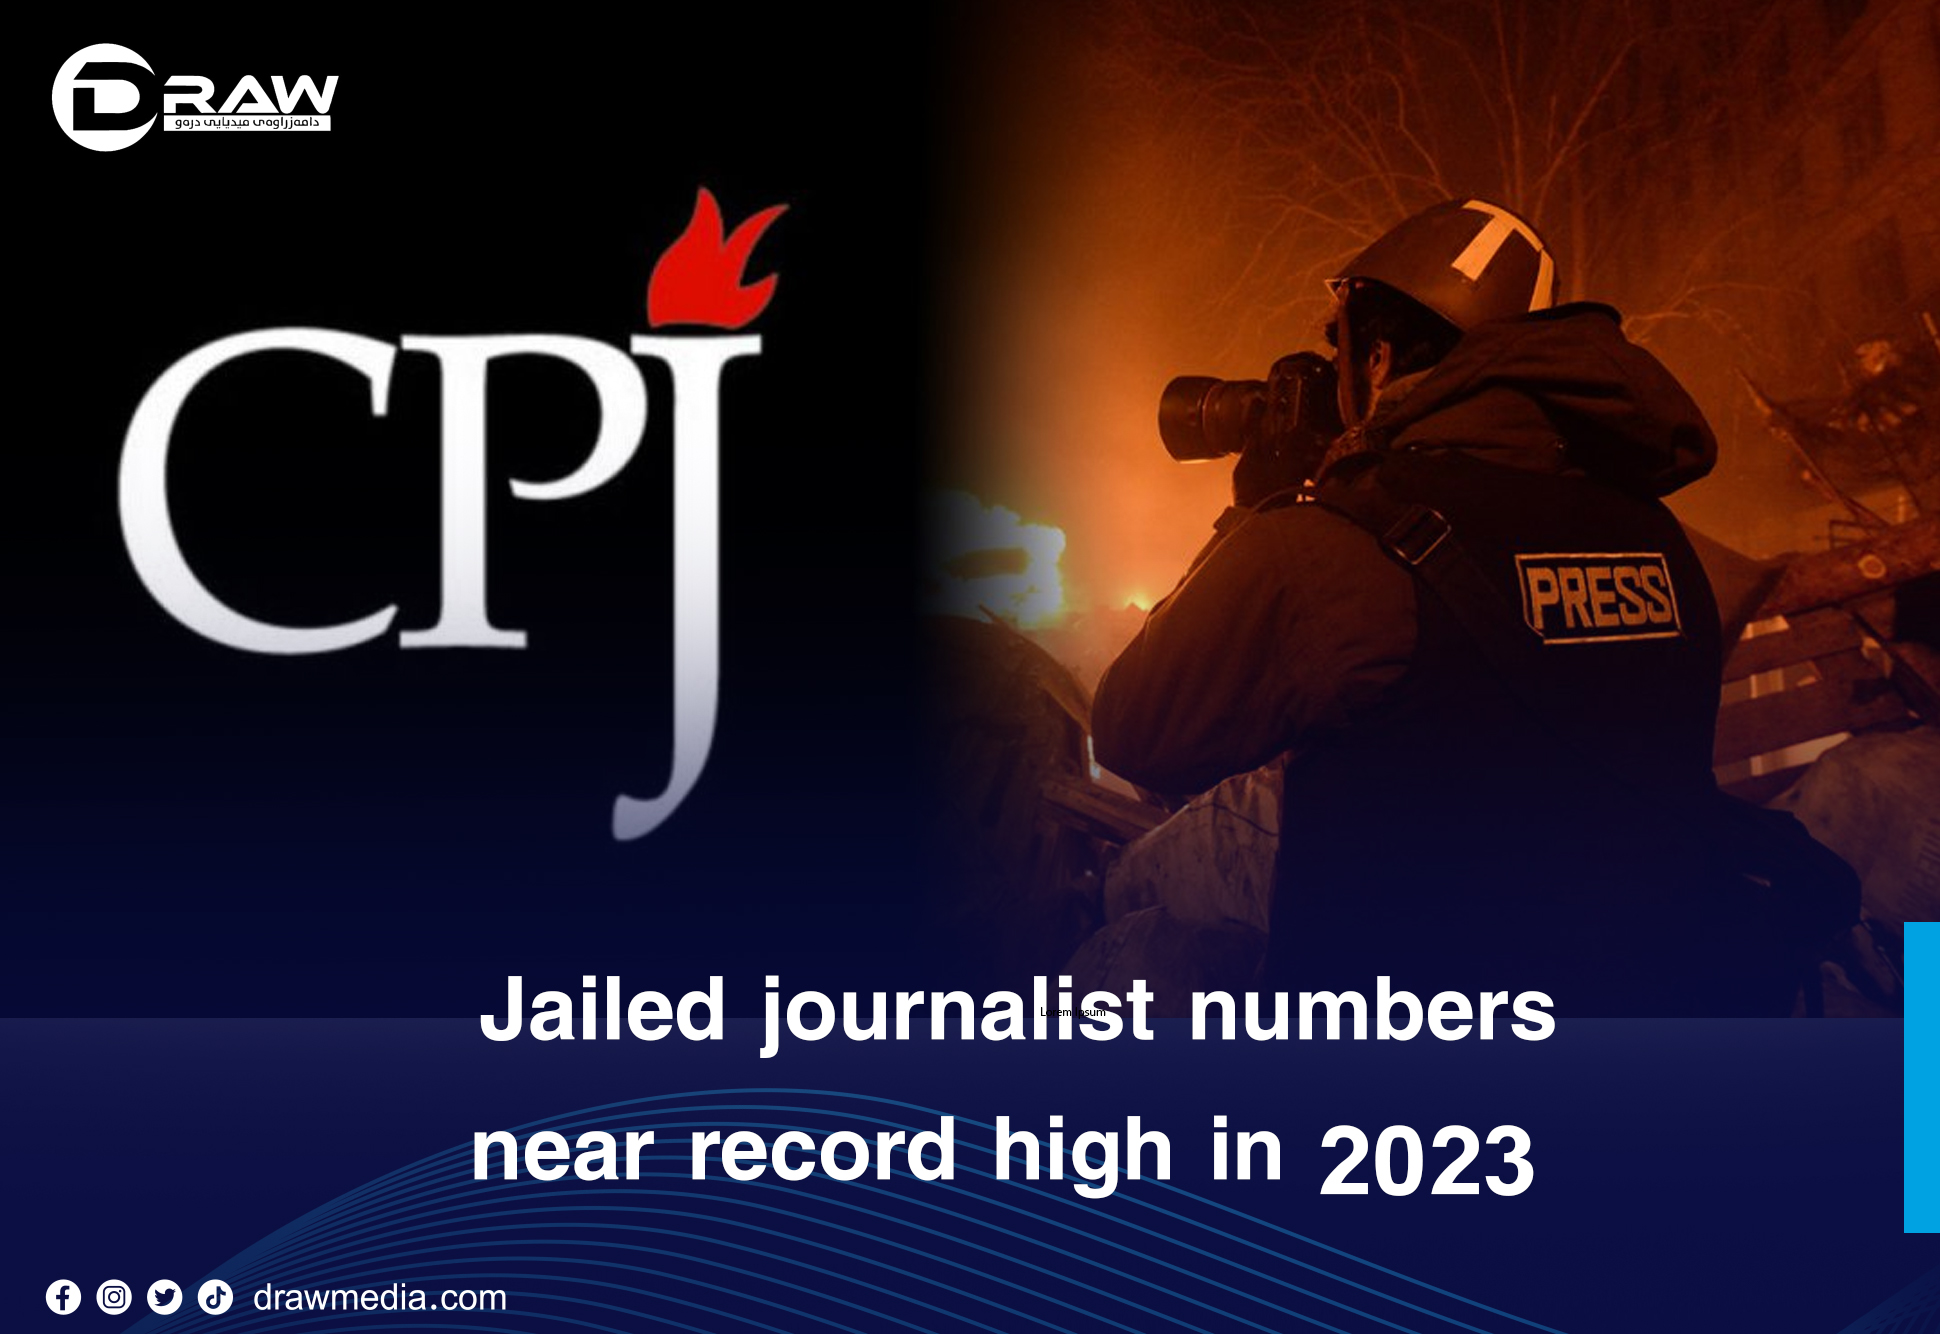 DrawMedia.net / 2023 prison census: Jailed journalist numbers near record high